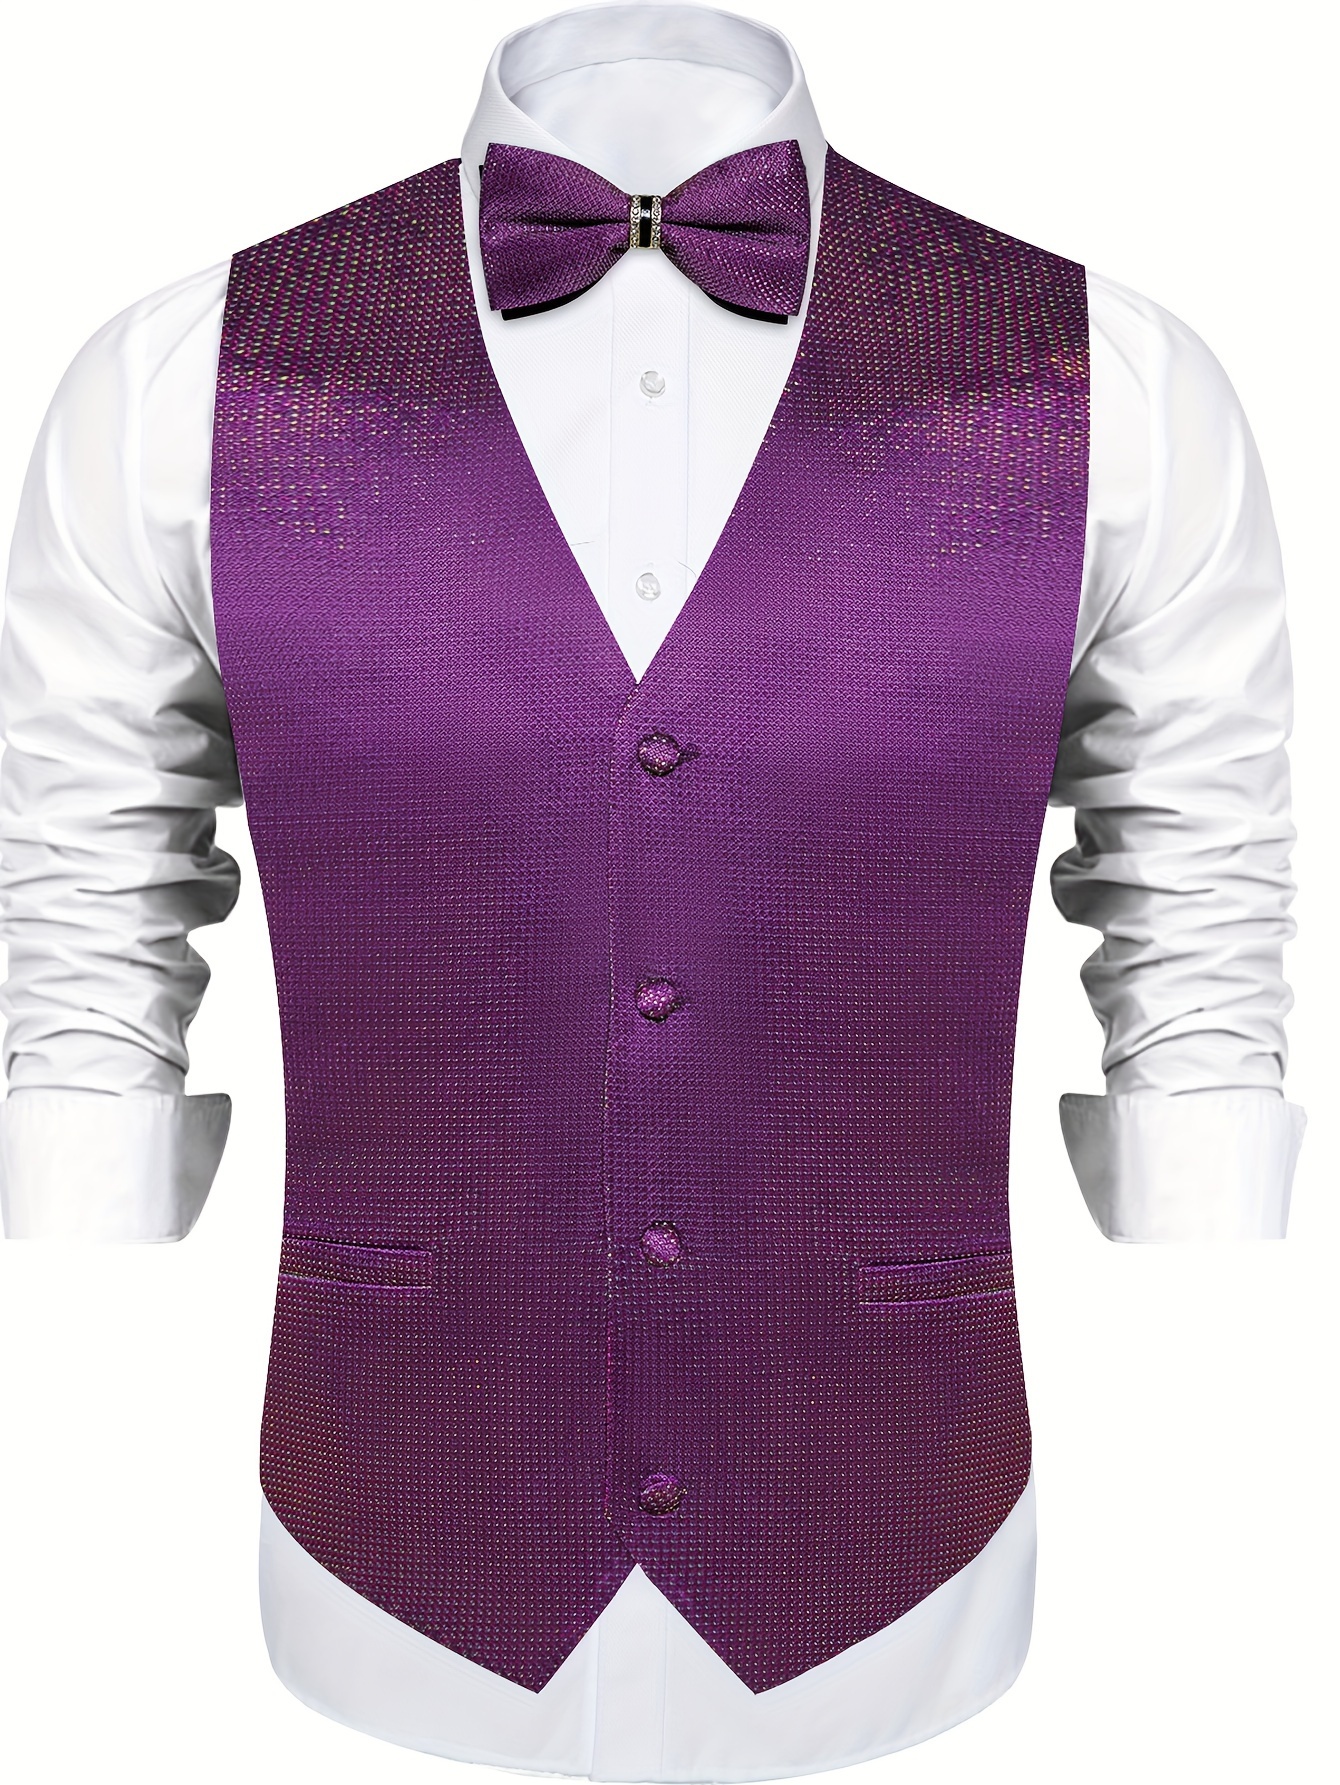 mens classic retro style single breasted waistcoat elegant v neck sleeveless suit vest with adjustable back belt casual wedding banquet vest